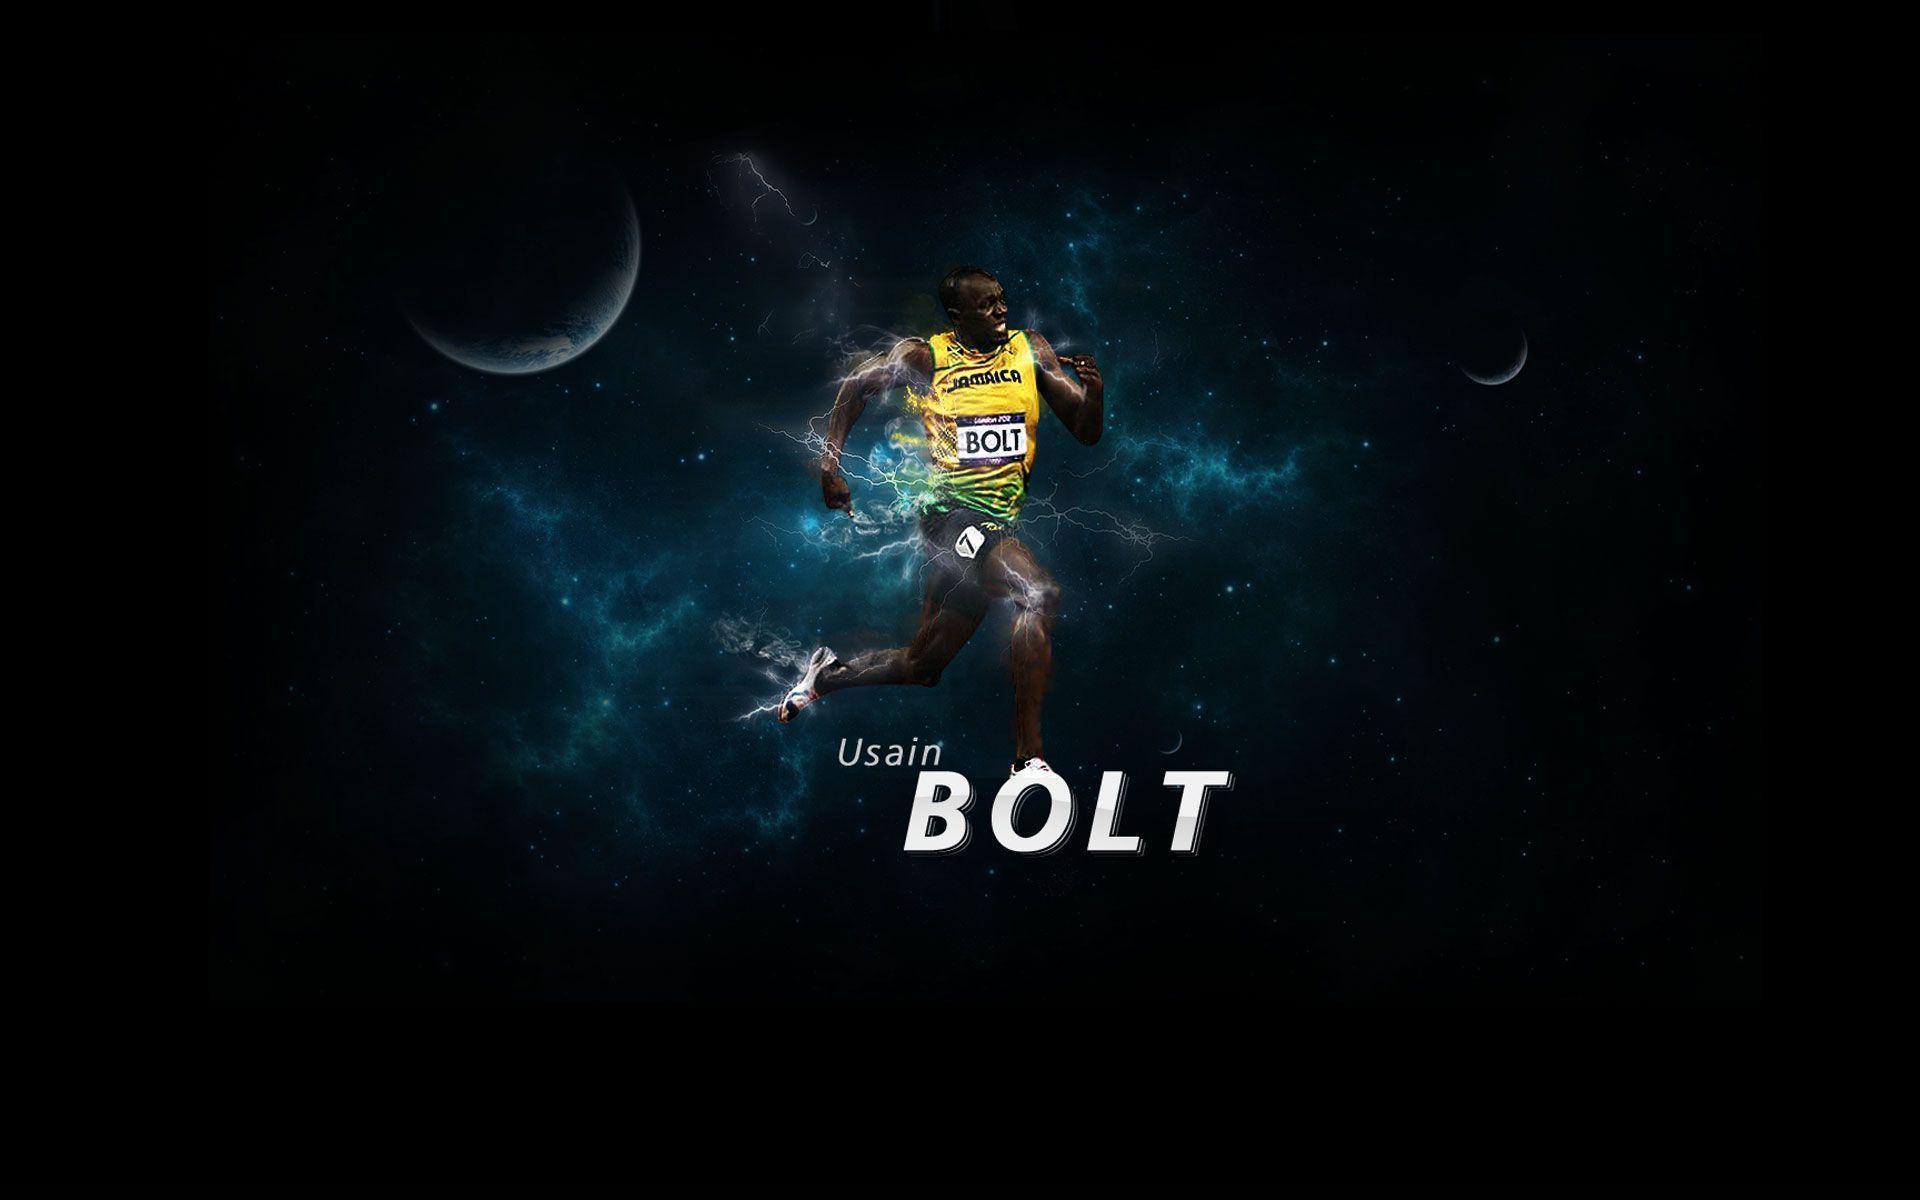 Usain Bolt runs like Puma wallpaper and image